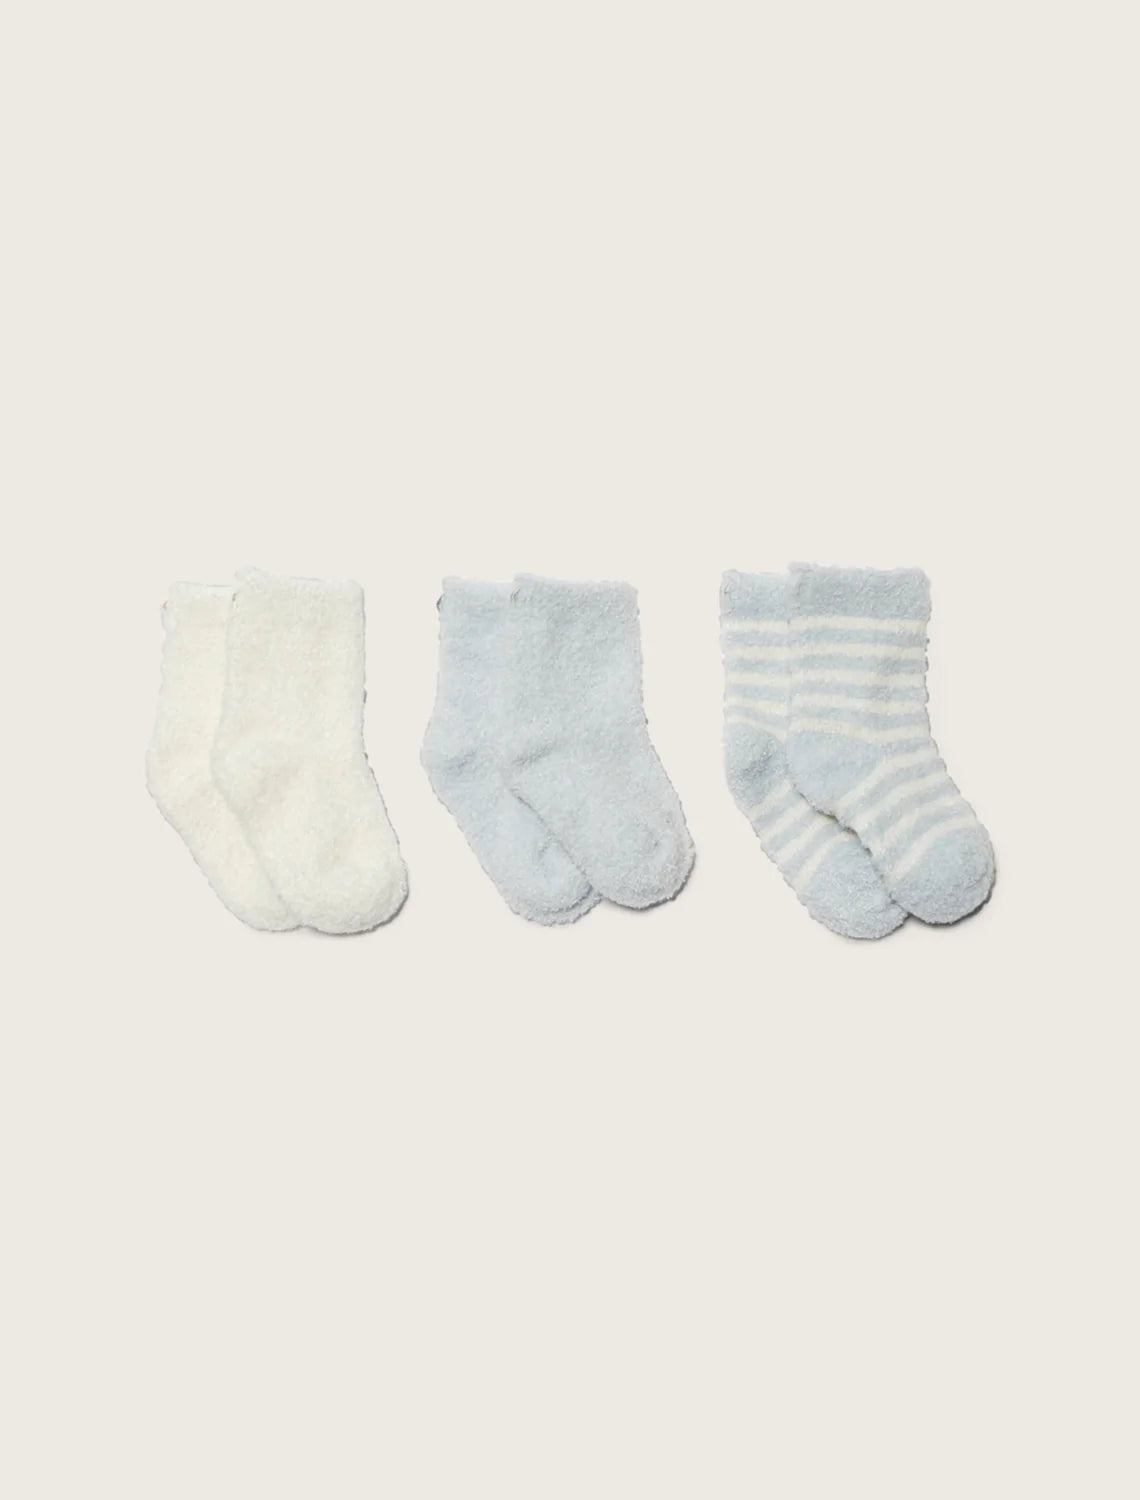 CozyChic Lite Infant Socks- Set of 3